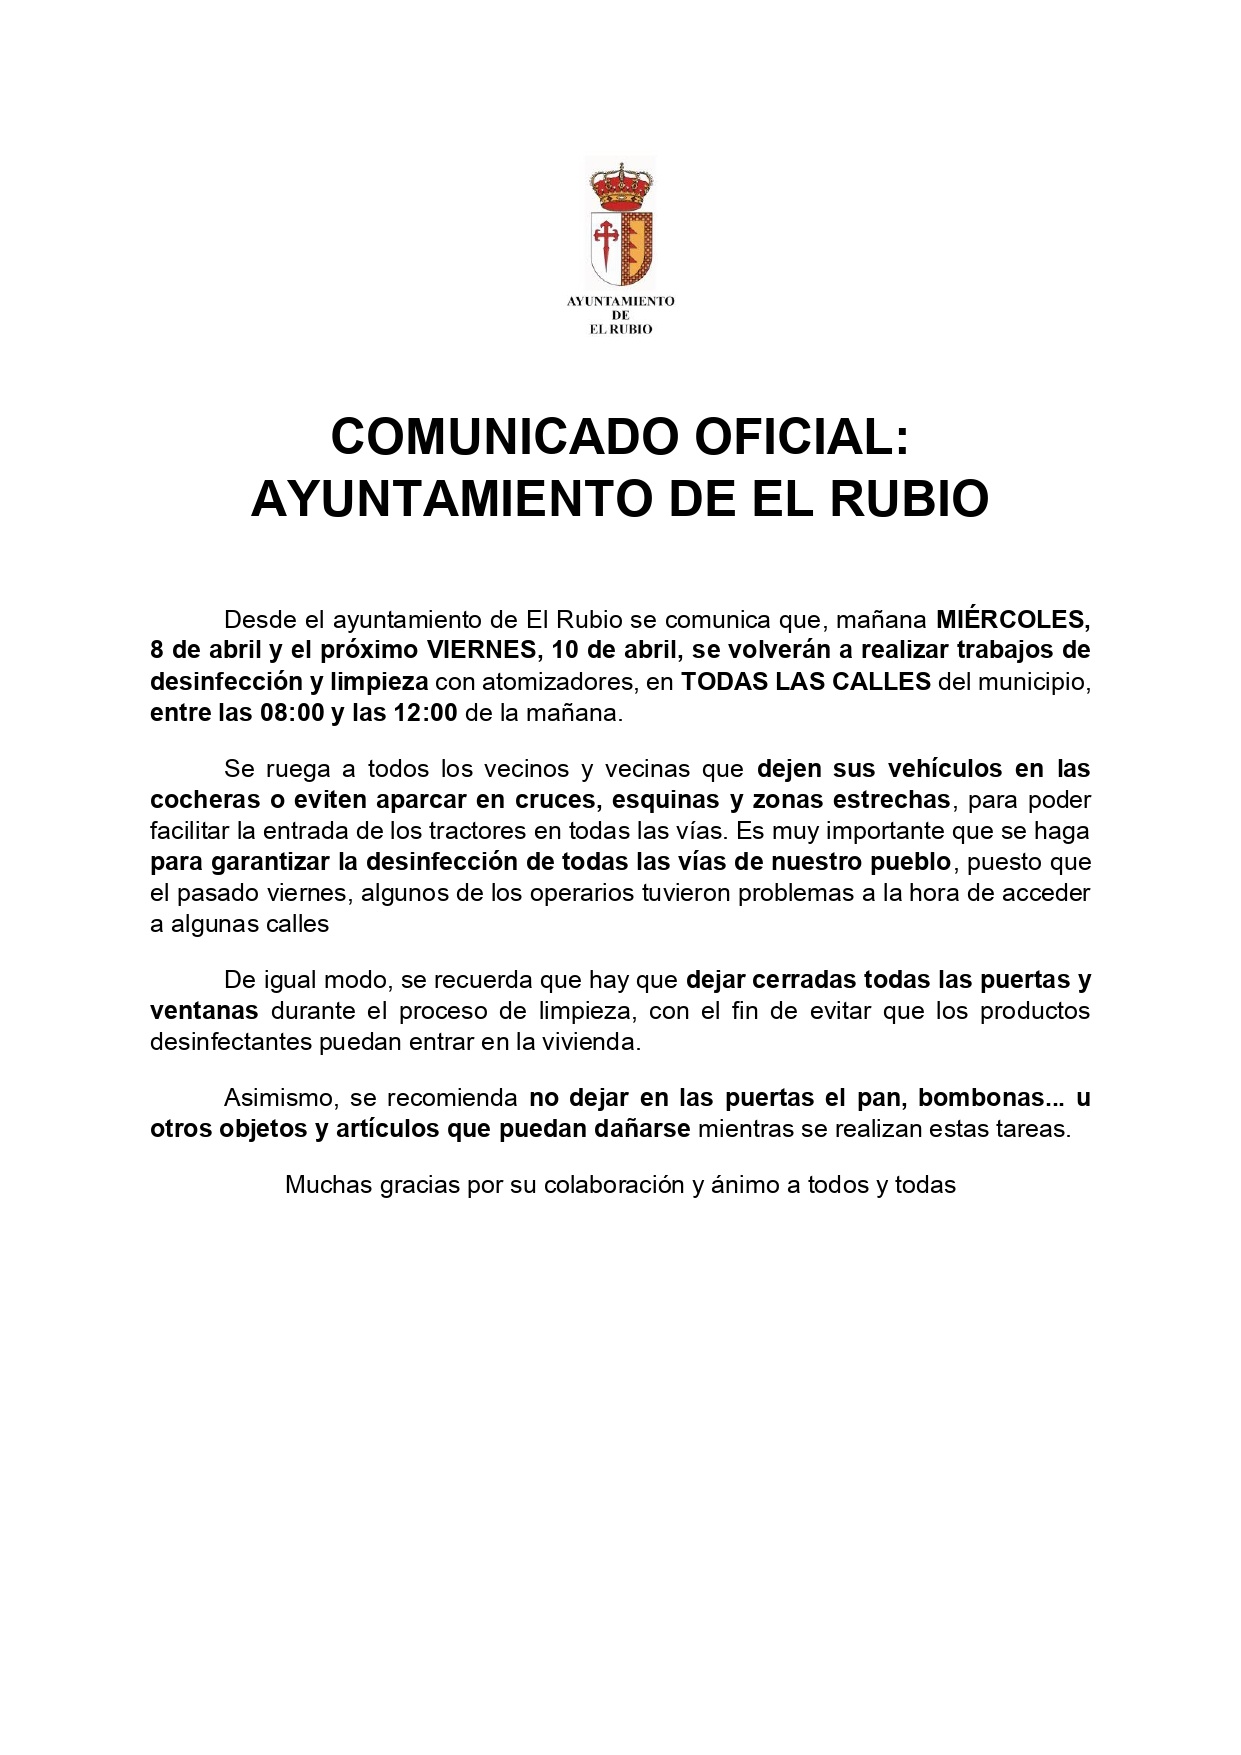 5.-COMUNICADO OFICIAL AYTO RUBIO 07-04-20_page-0001 (1)